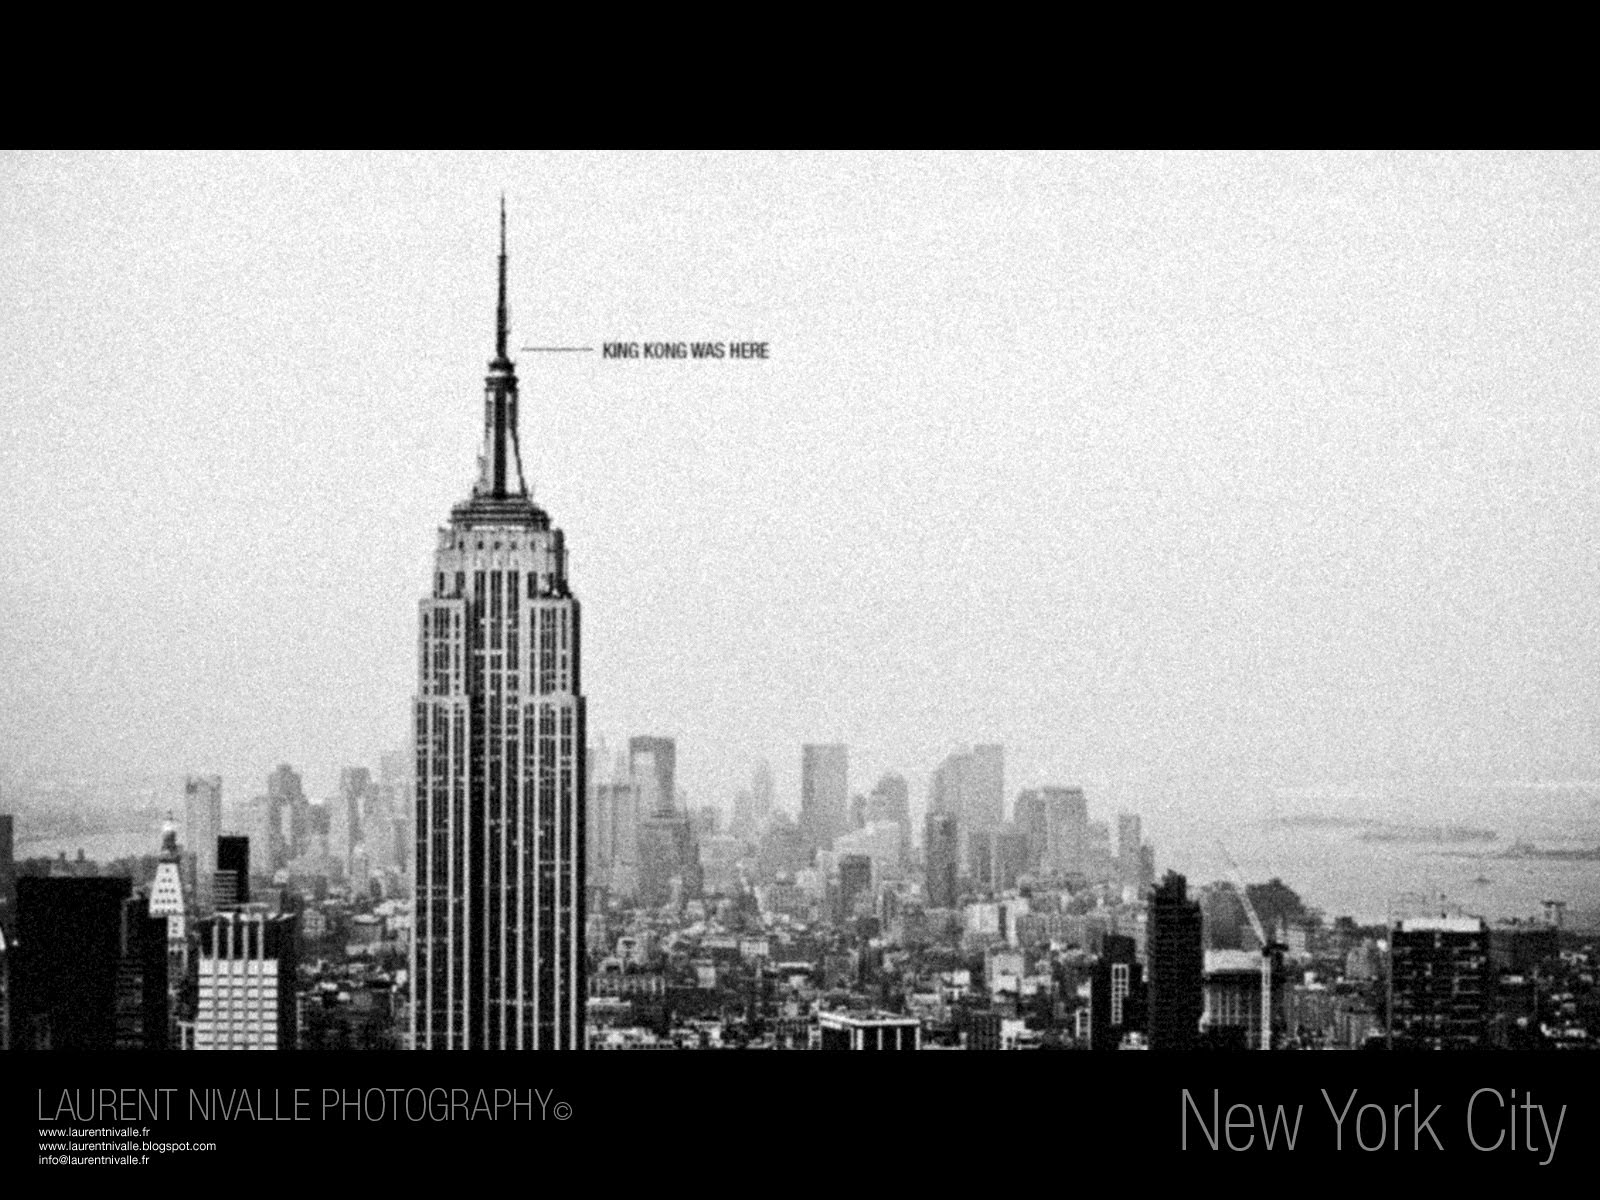 new york city wallpaper - www.high-definition-wallpaper.com